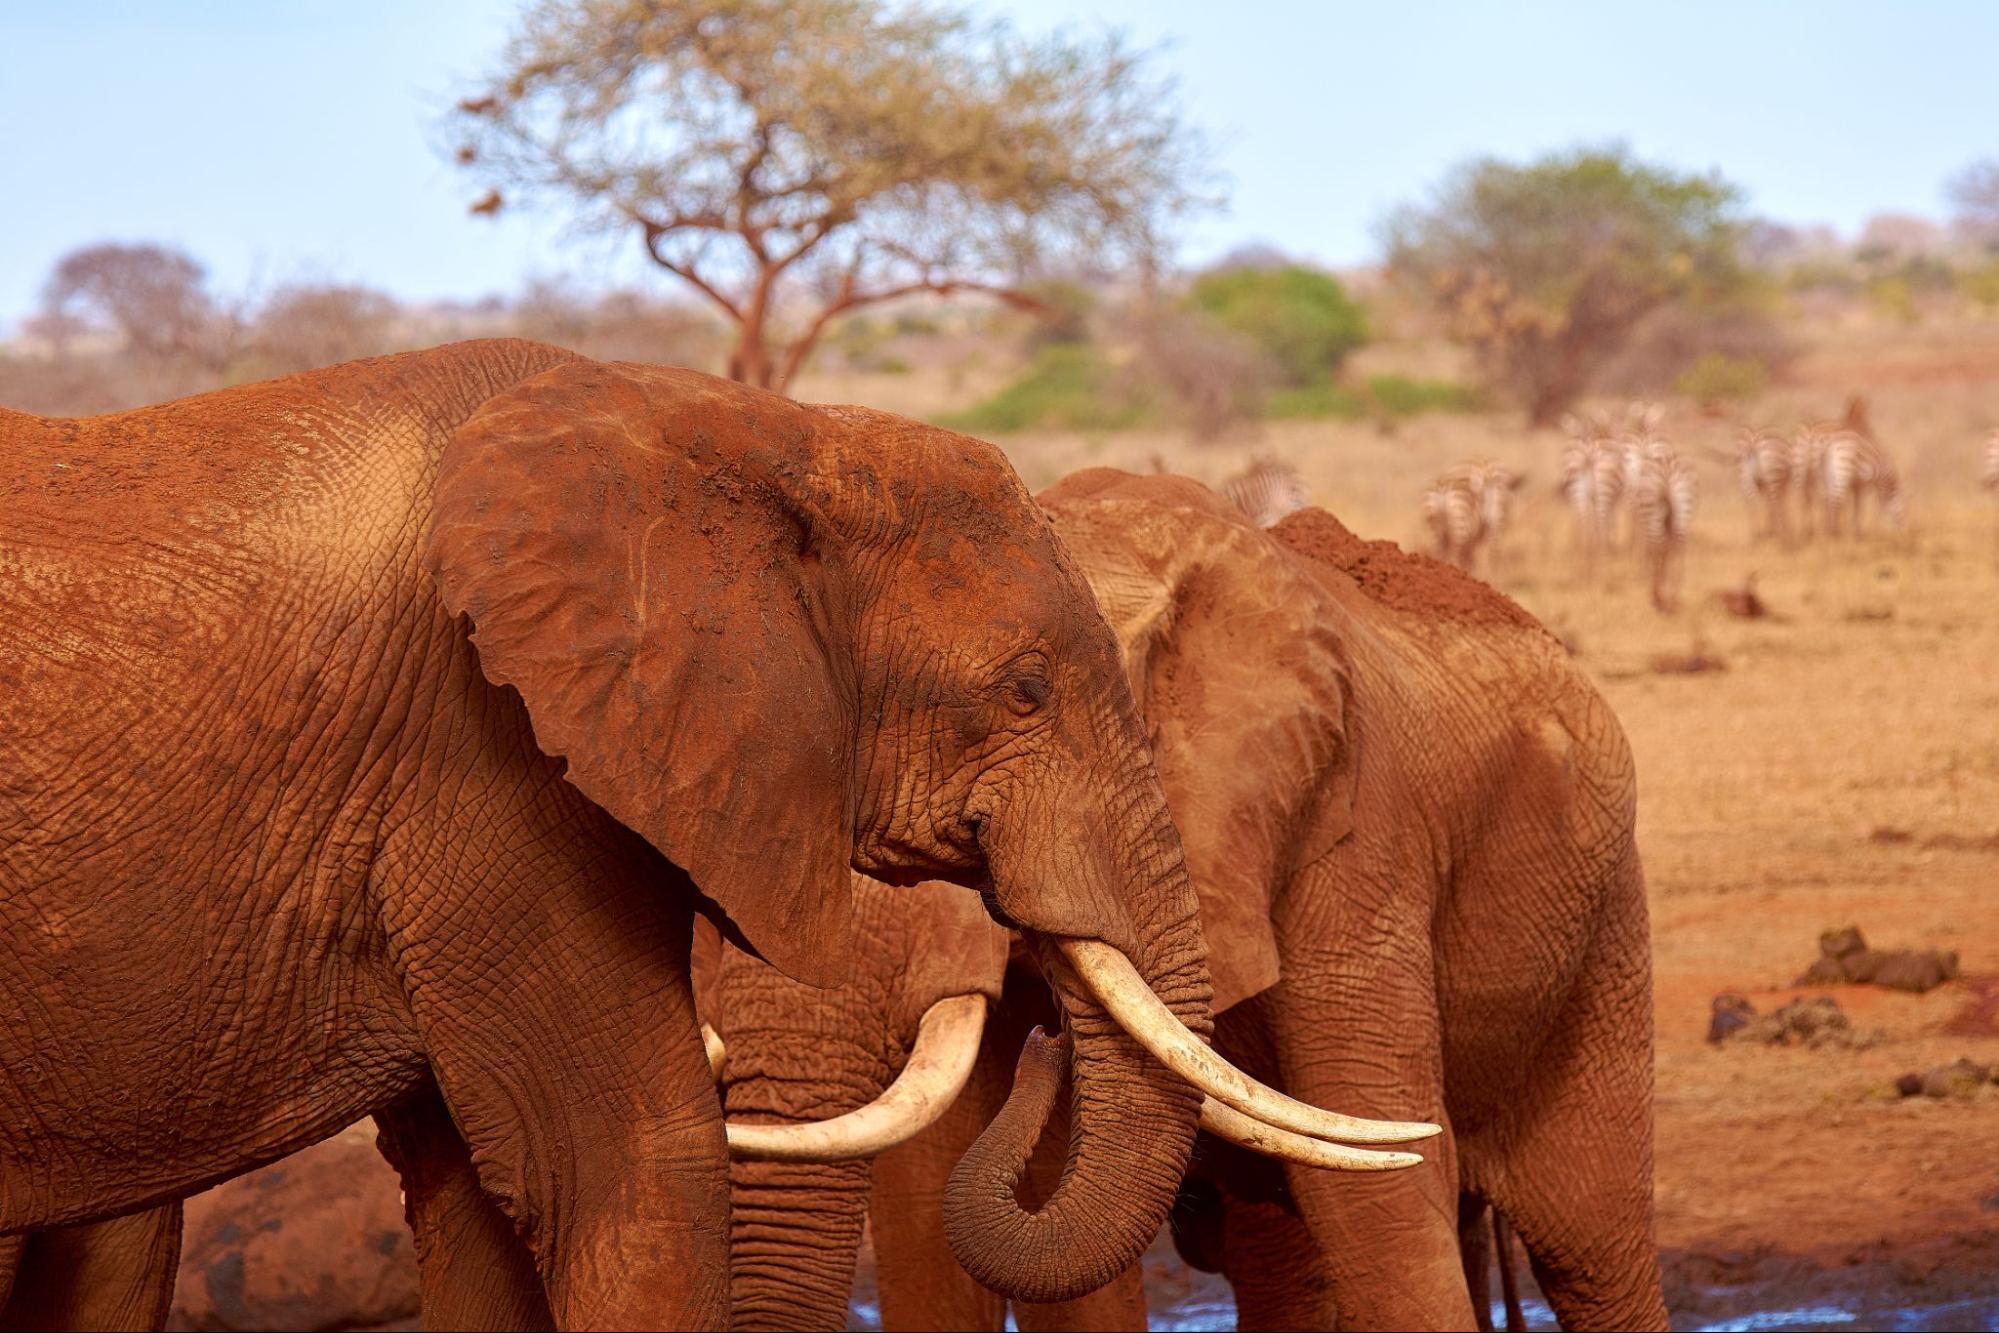 Elephants in Tsavo East National Park